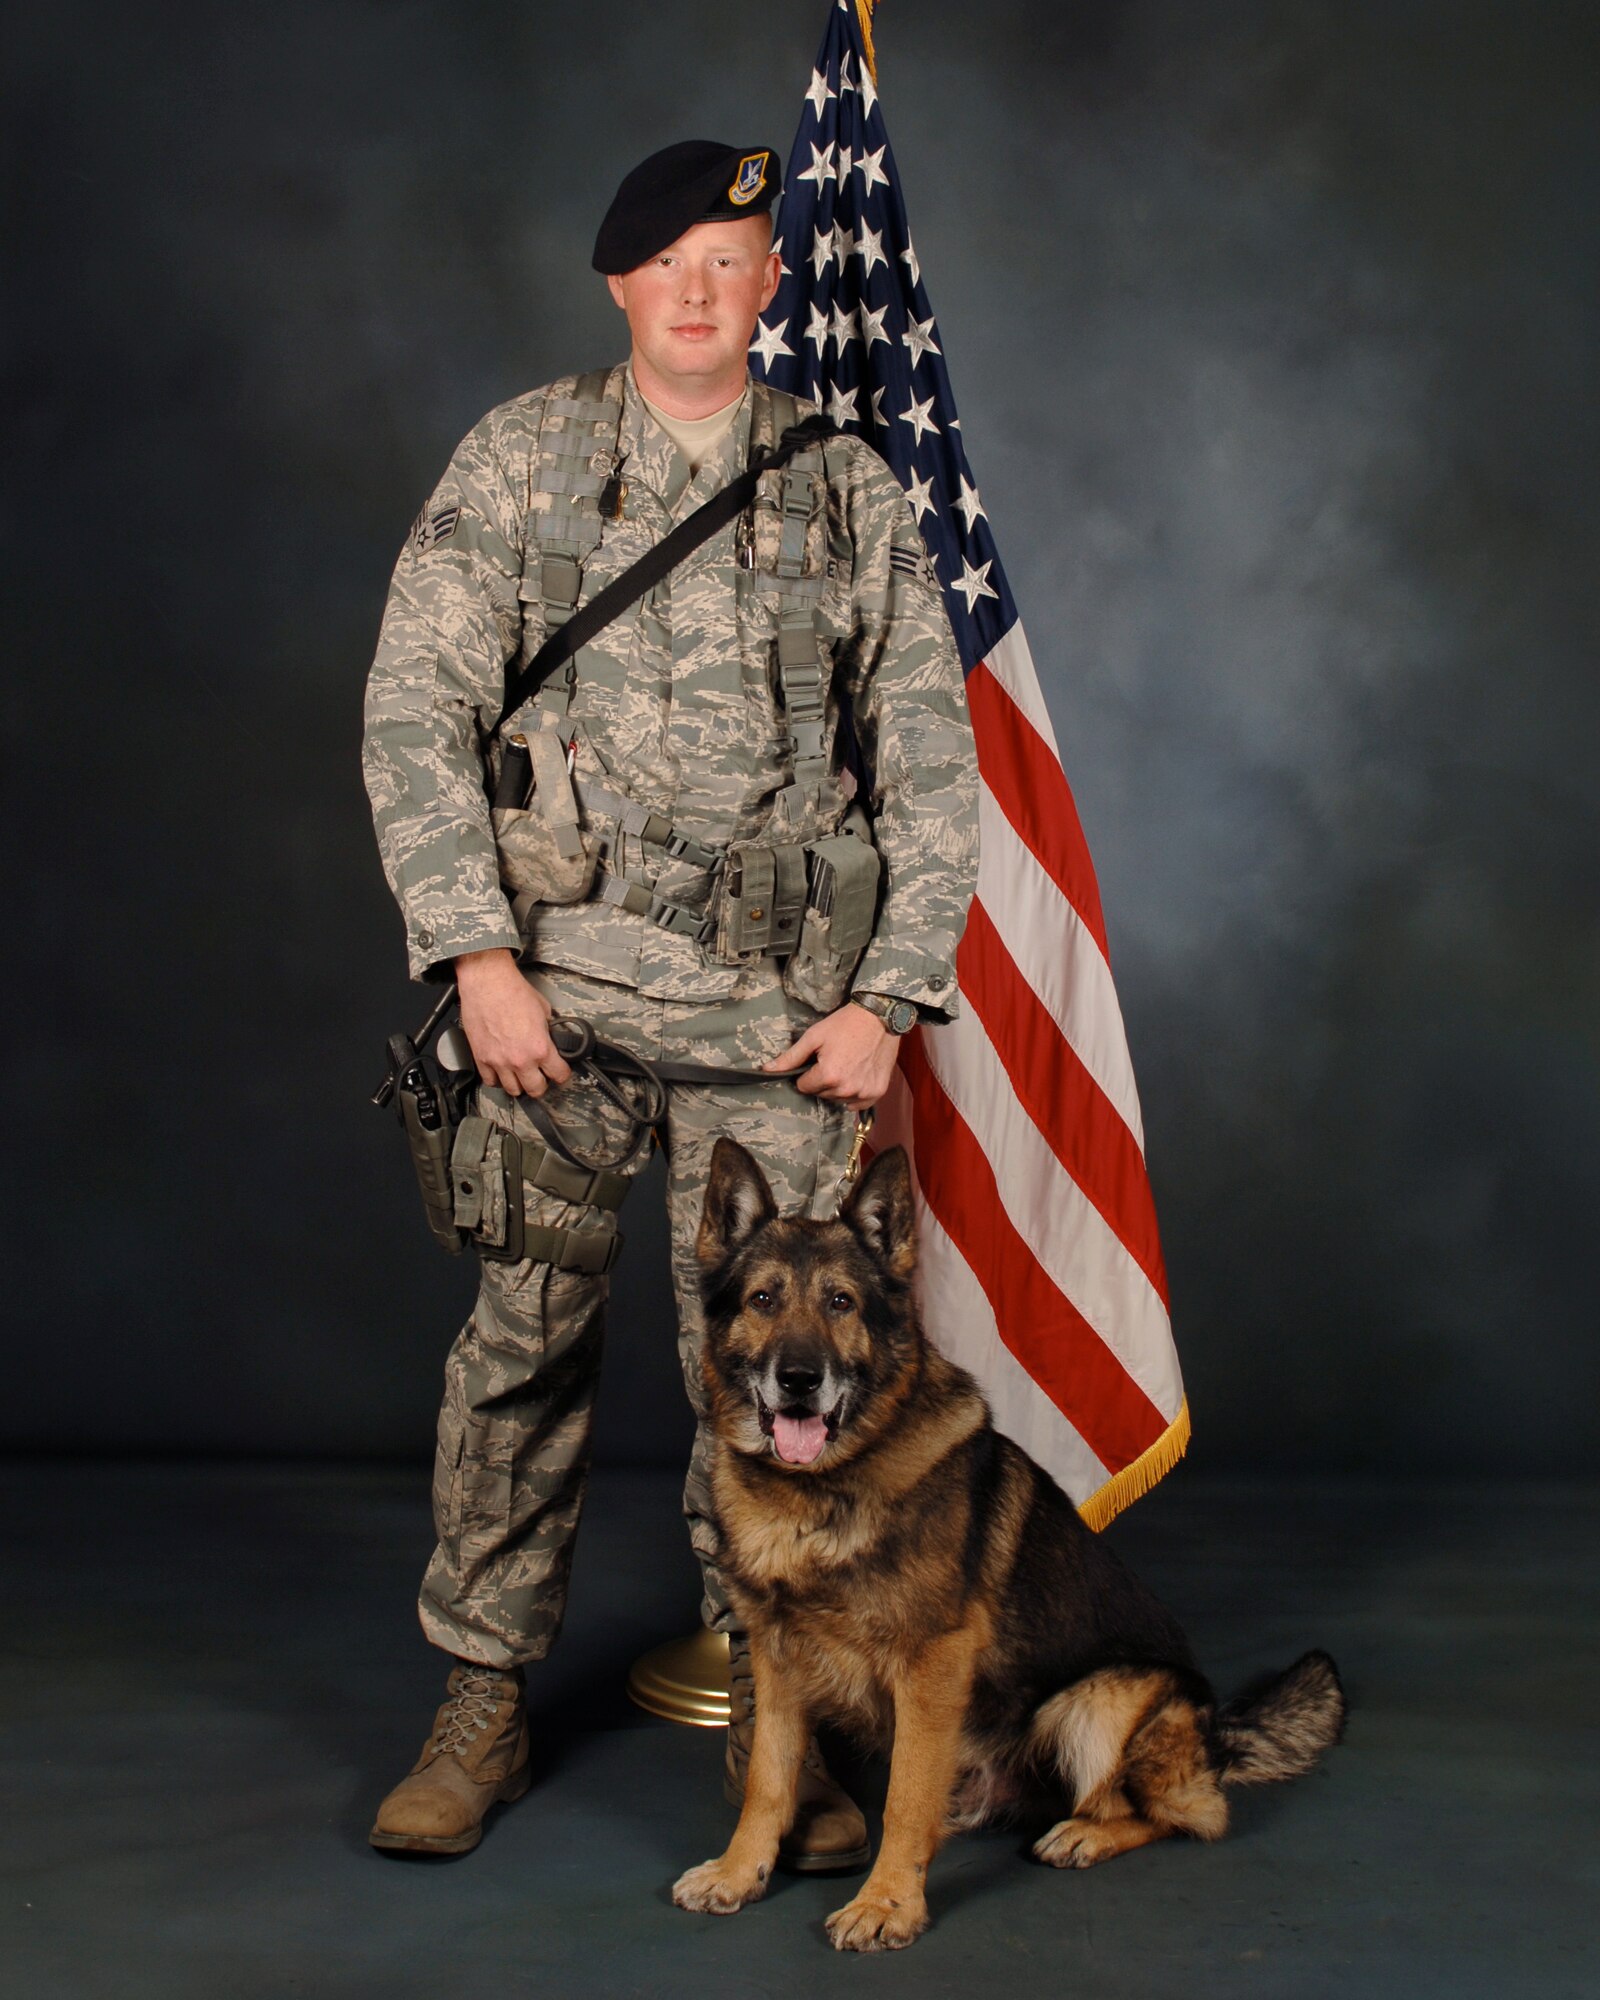 Sergeant Rex, IED-hunting dog celebrated in book, dies